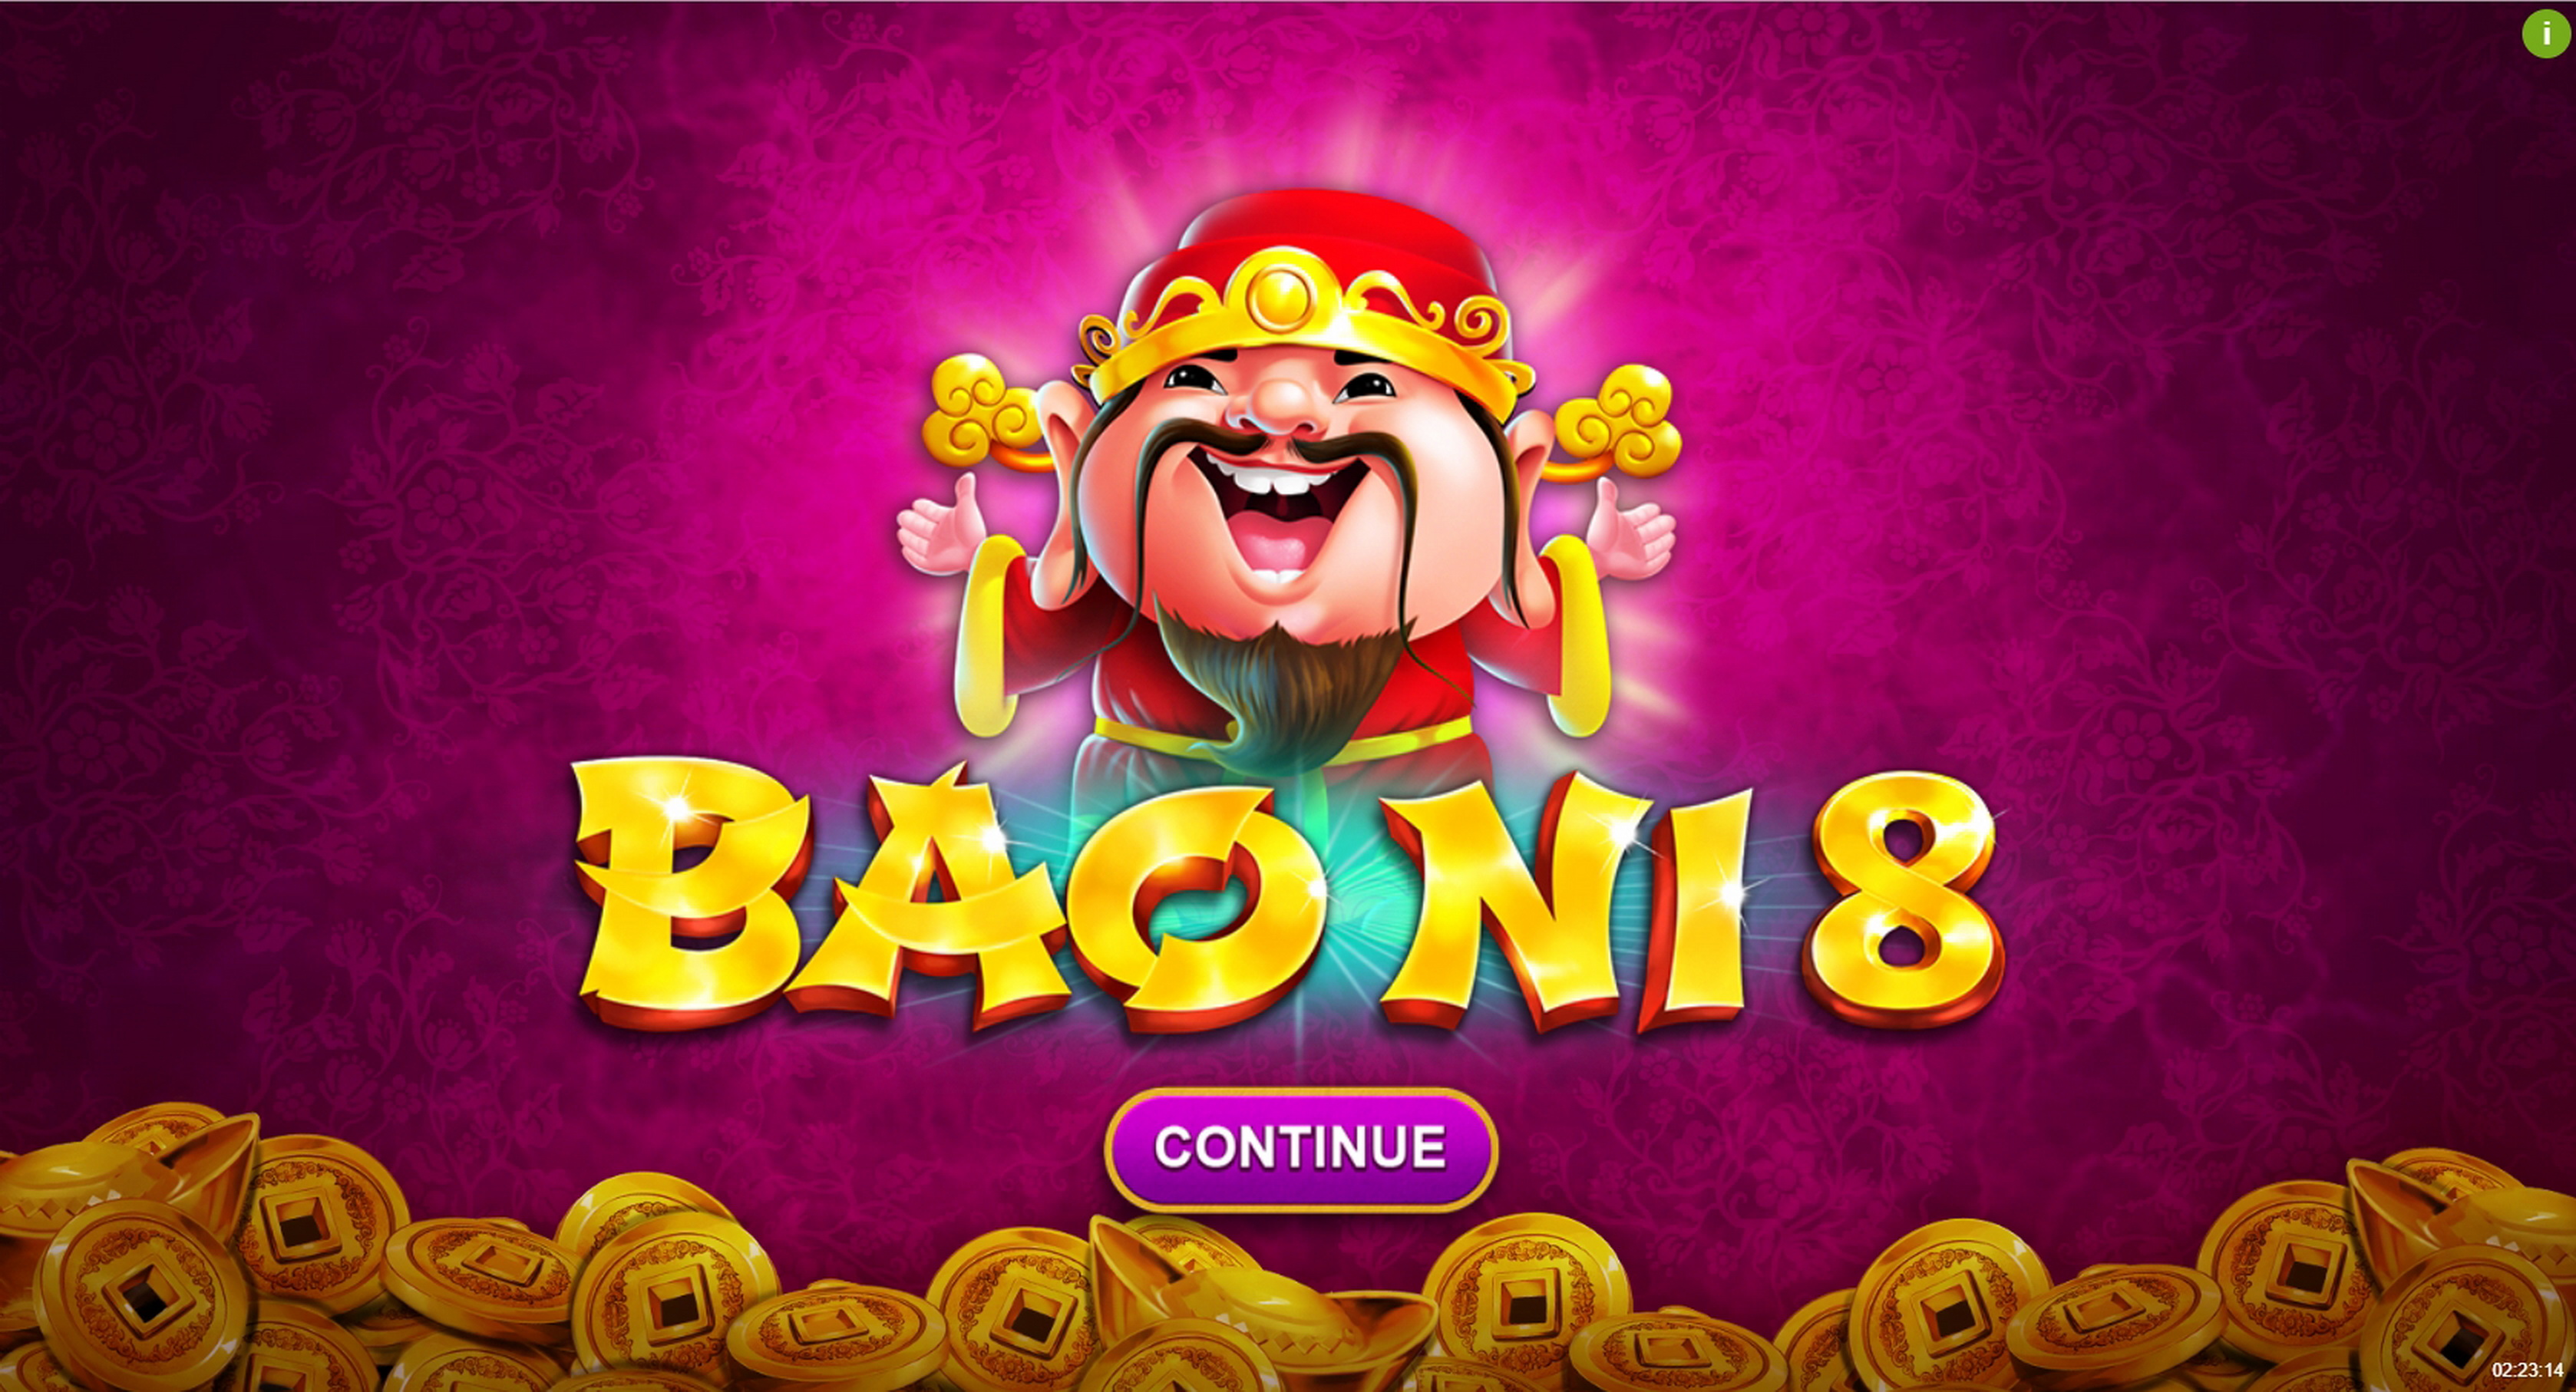 Play Bao Ni 8 Free Casino Slot Game by Real Time Gaming